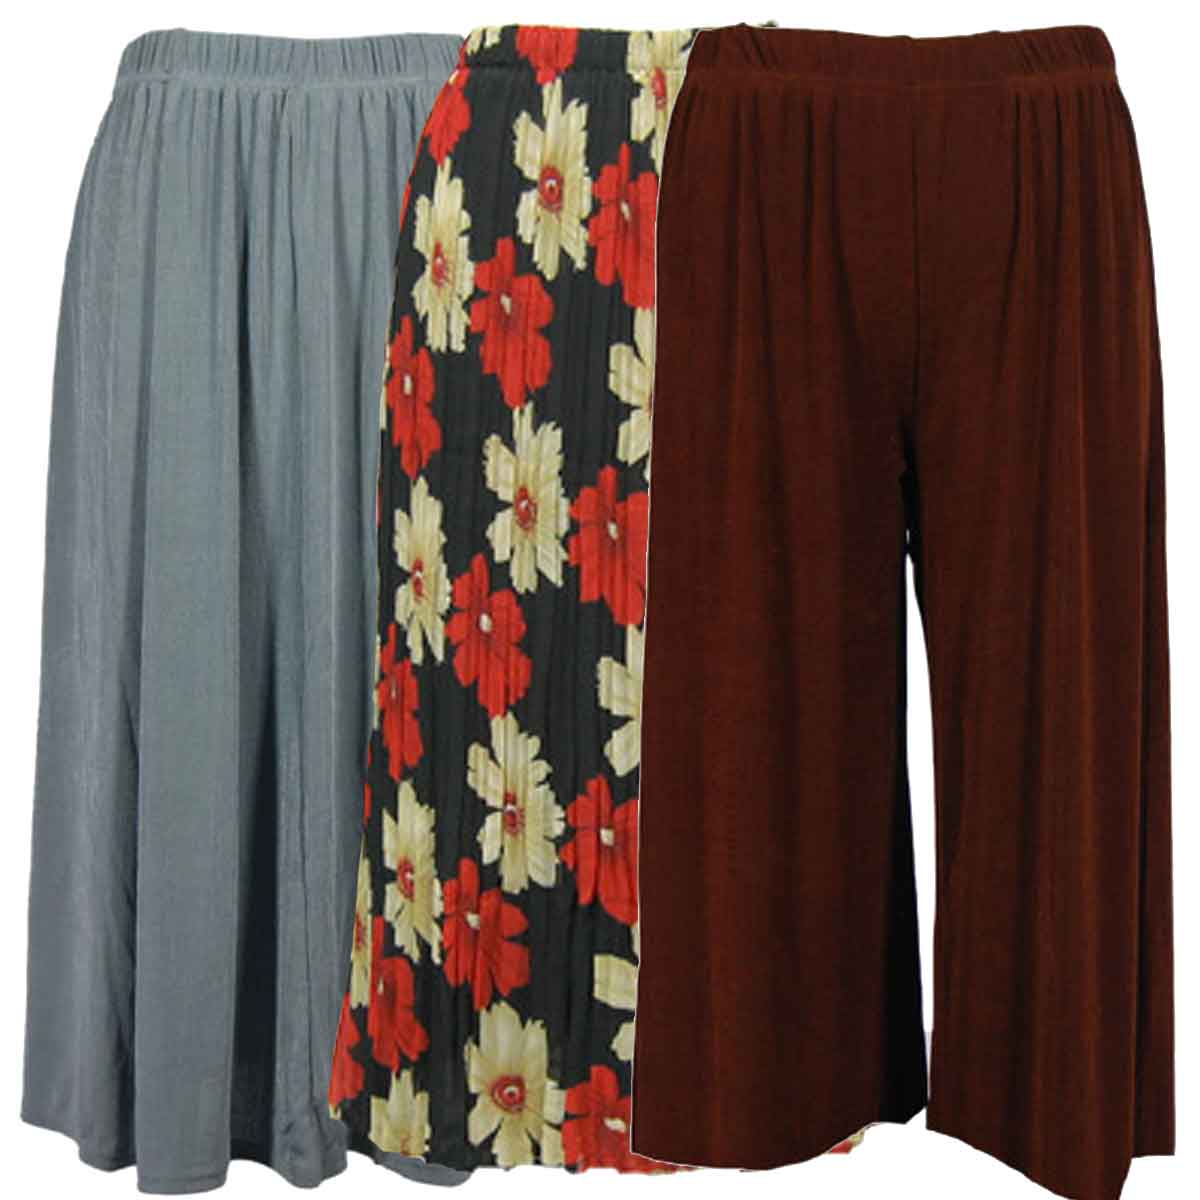 Overstock Skirts, Pants, & Dresses - Sale<br>(40% Off)